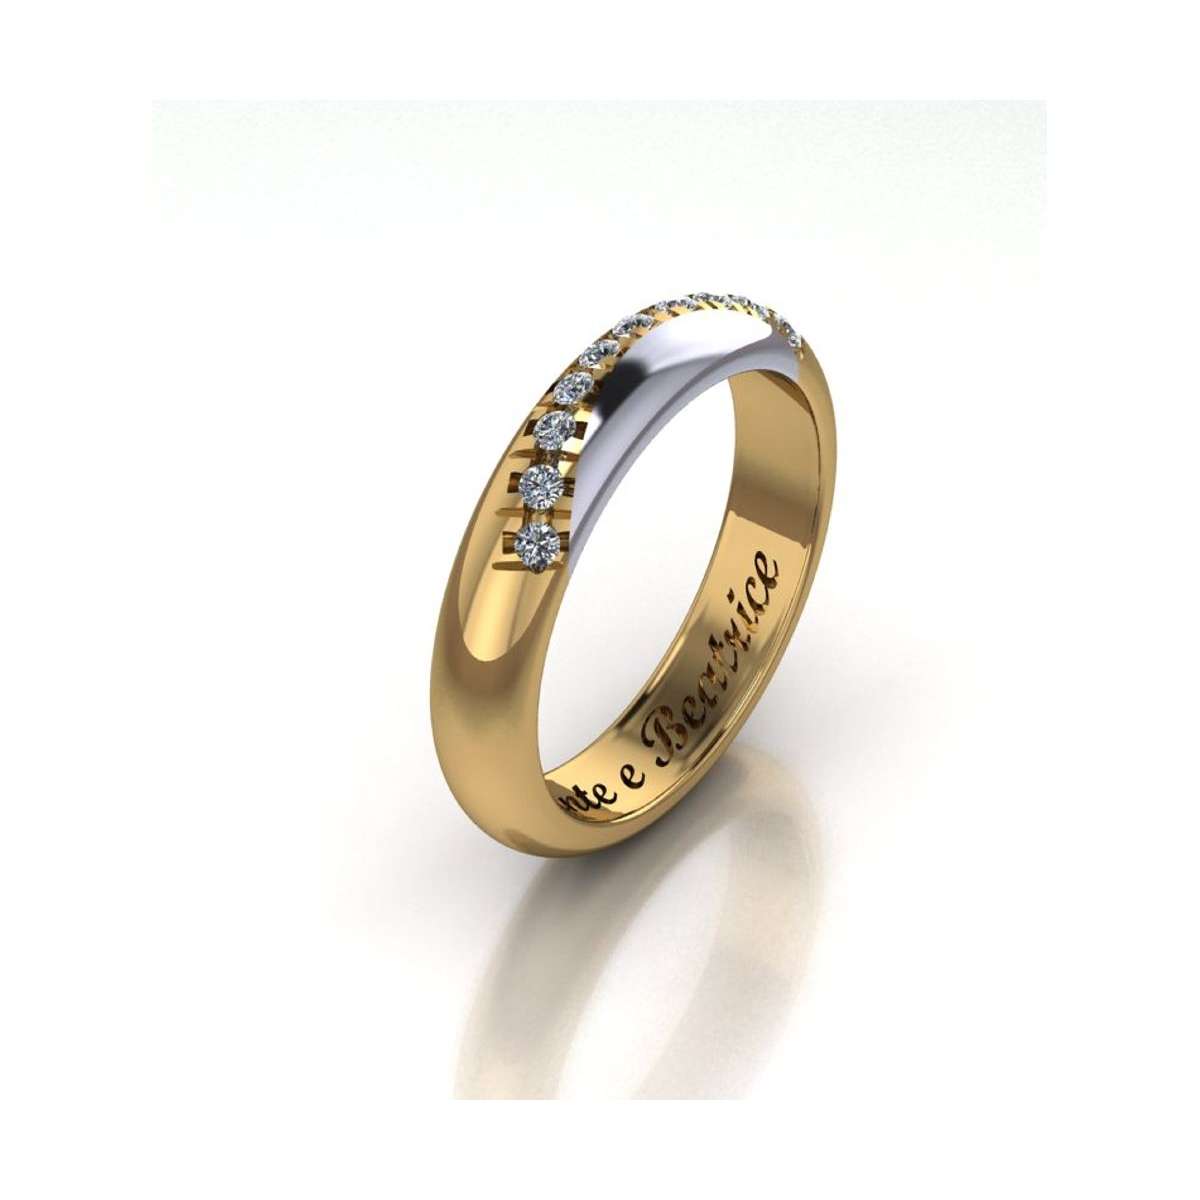 Wedding ring Dante and Beatrice white gold half moon diamond setting 0.13 carats G-VS1